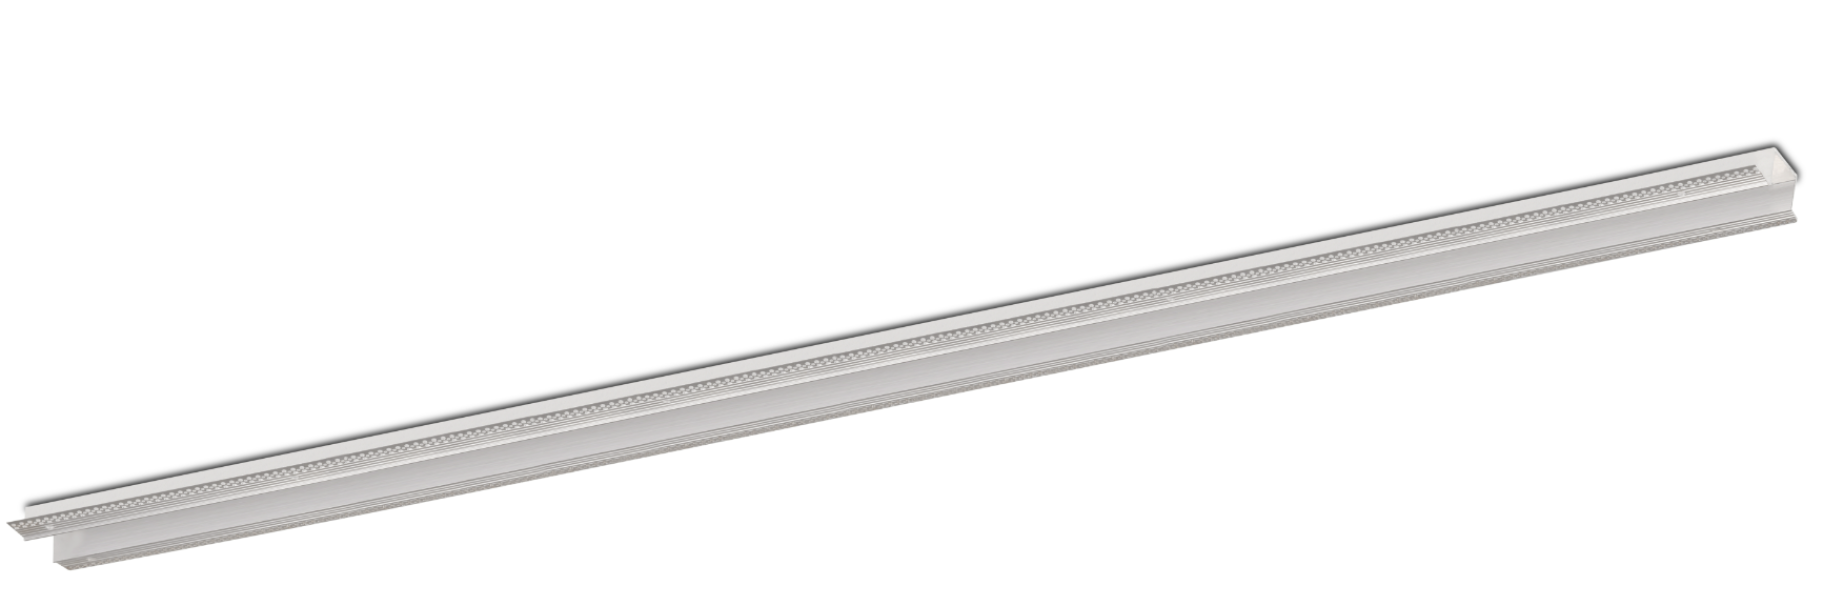 Binario Trio Lighting Duoline 115cm alluminio - 703809 01